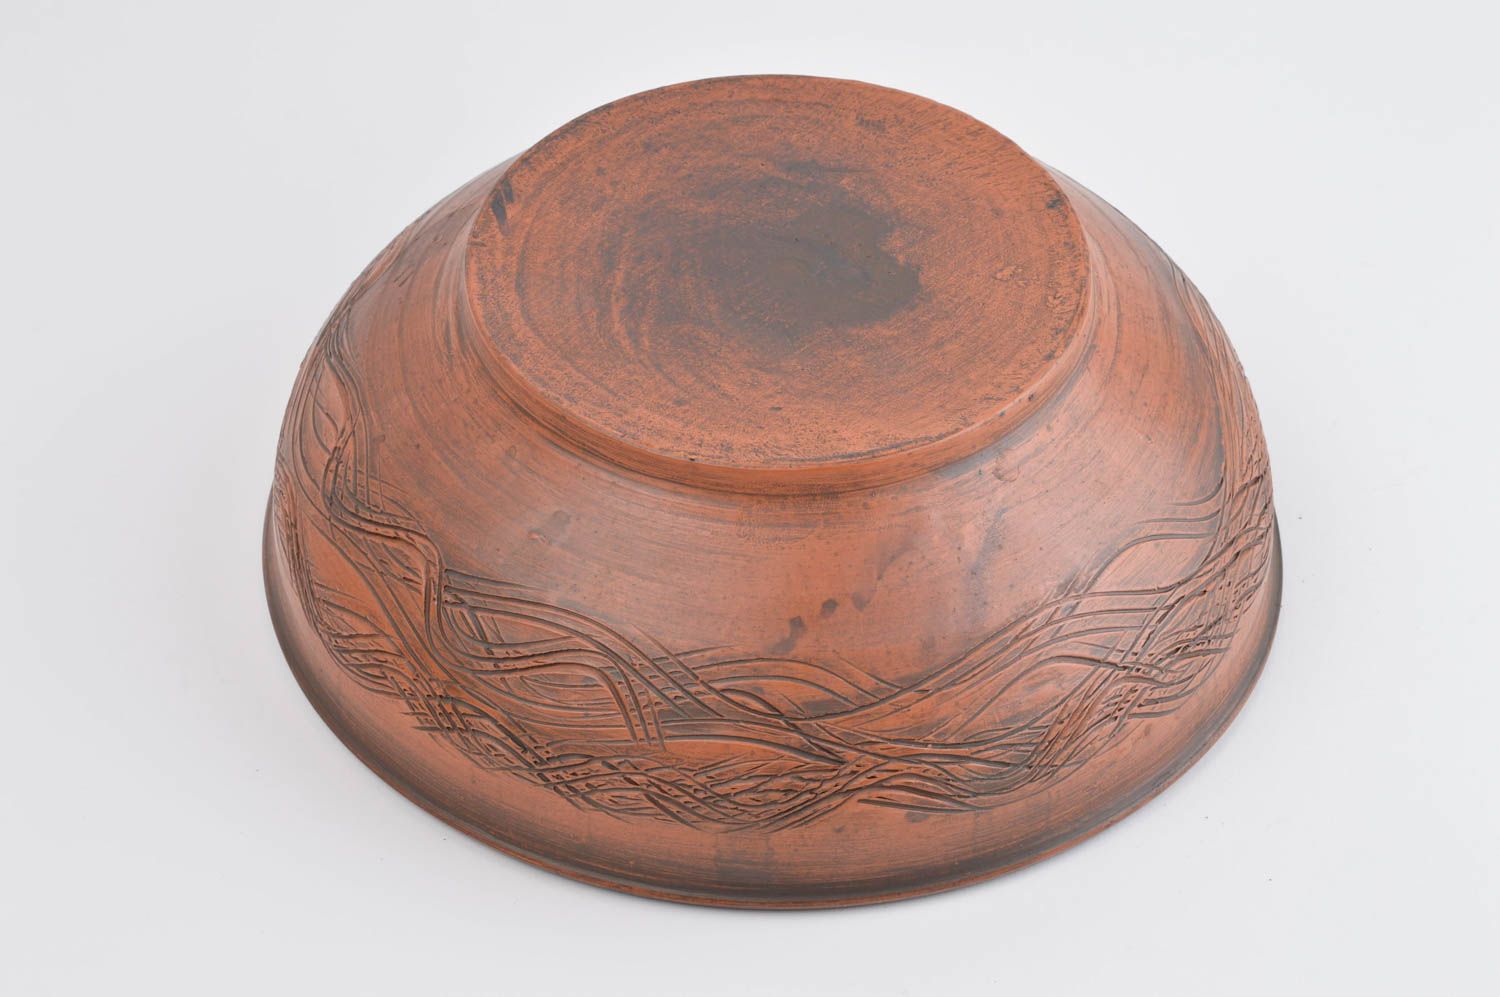 Beautiful handmade ceramic bowl salad bowl designs home ceramics gift ideas photo 3